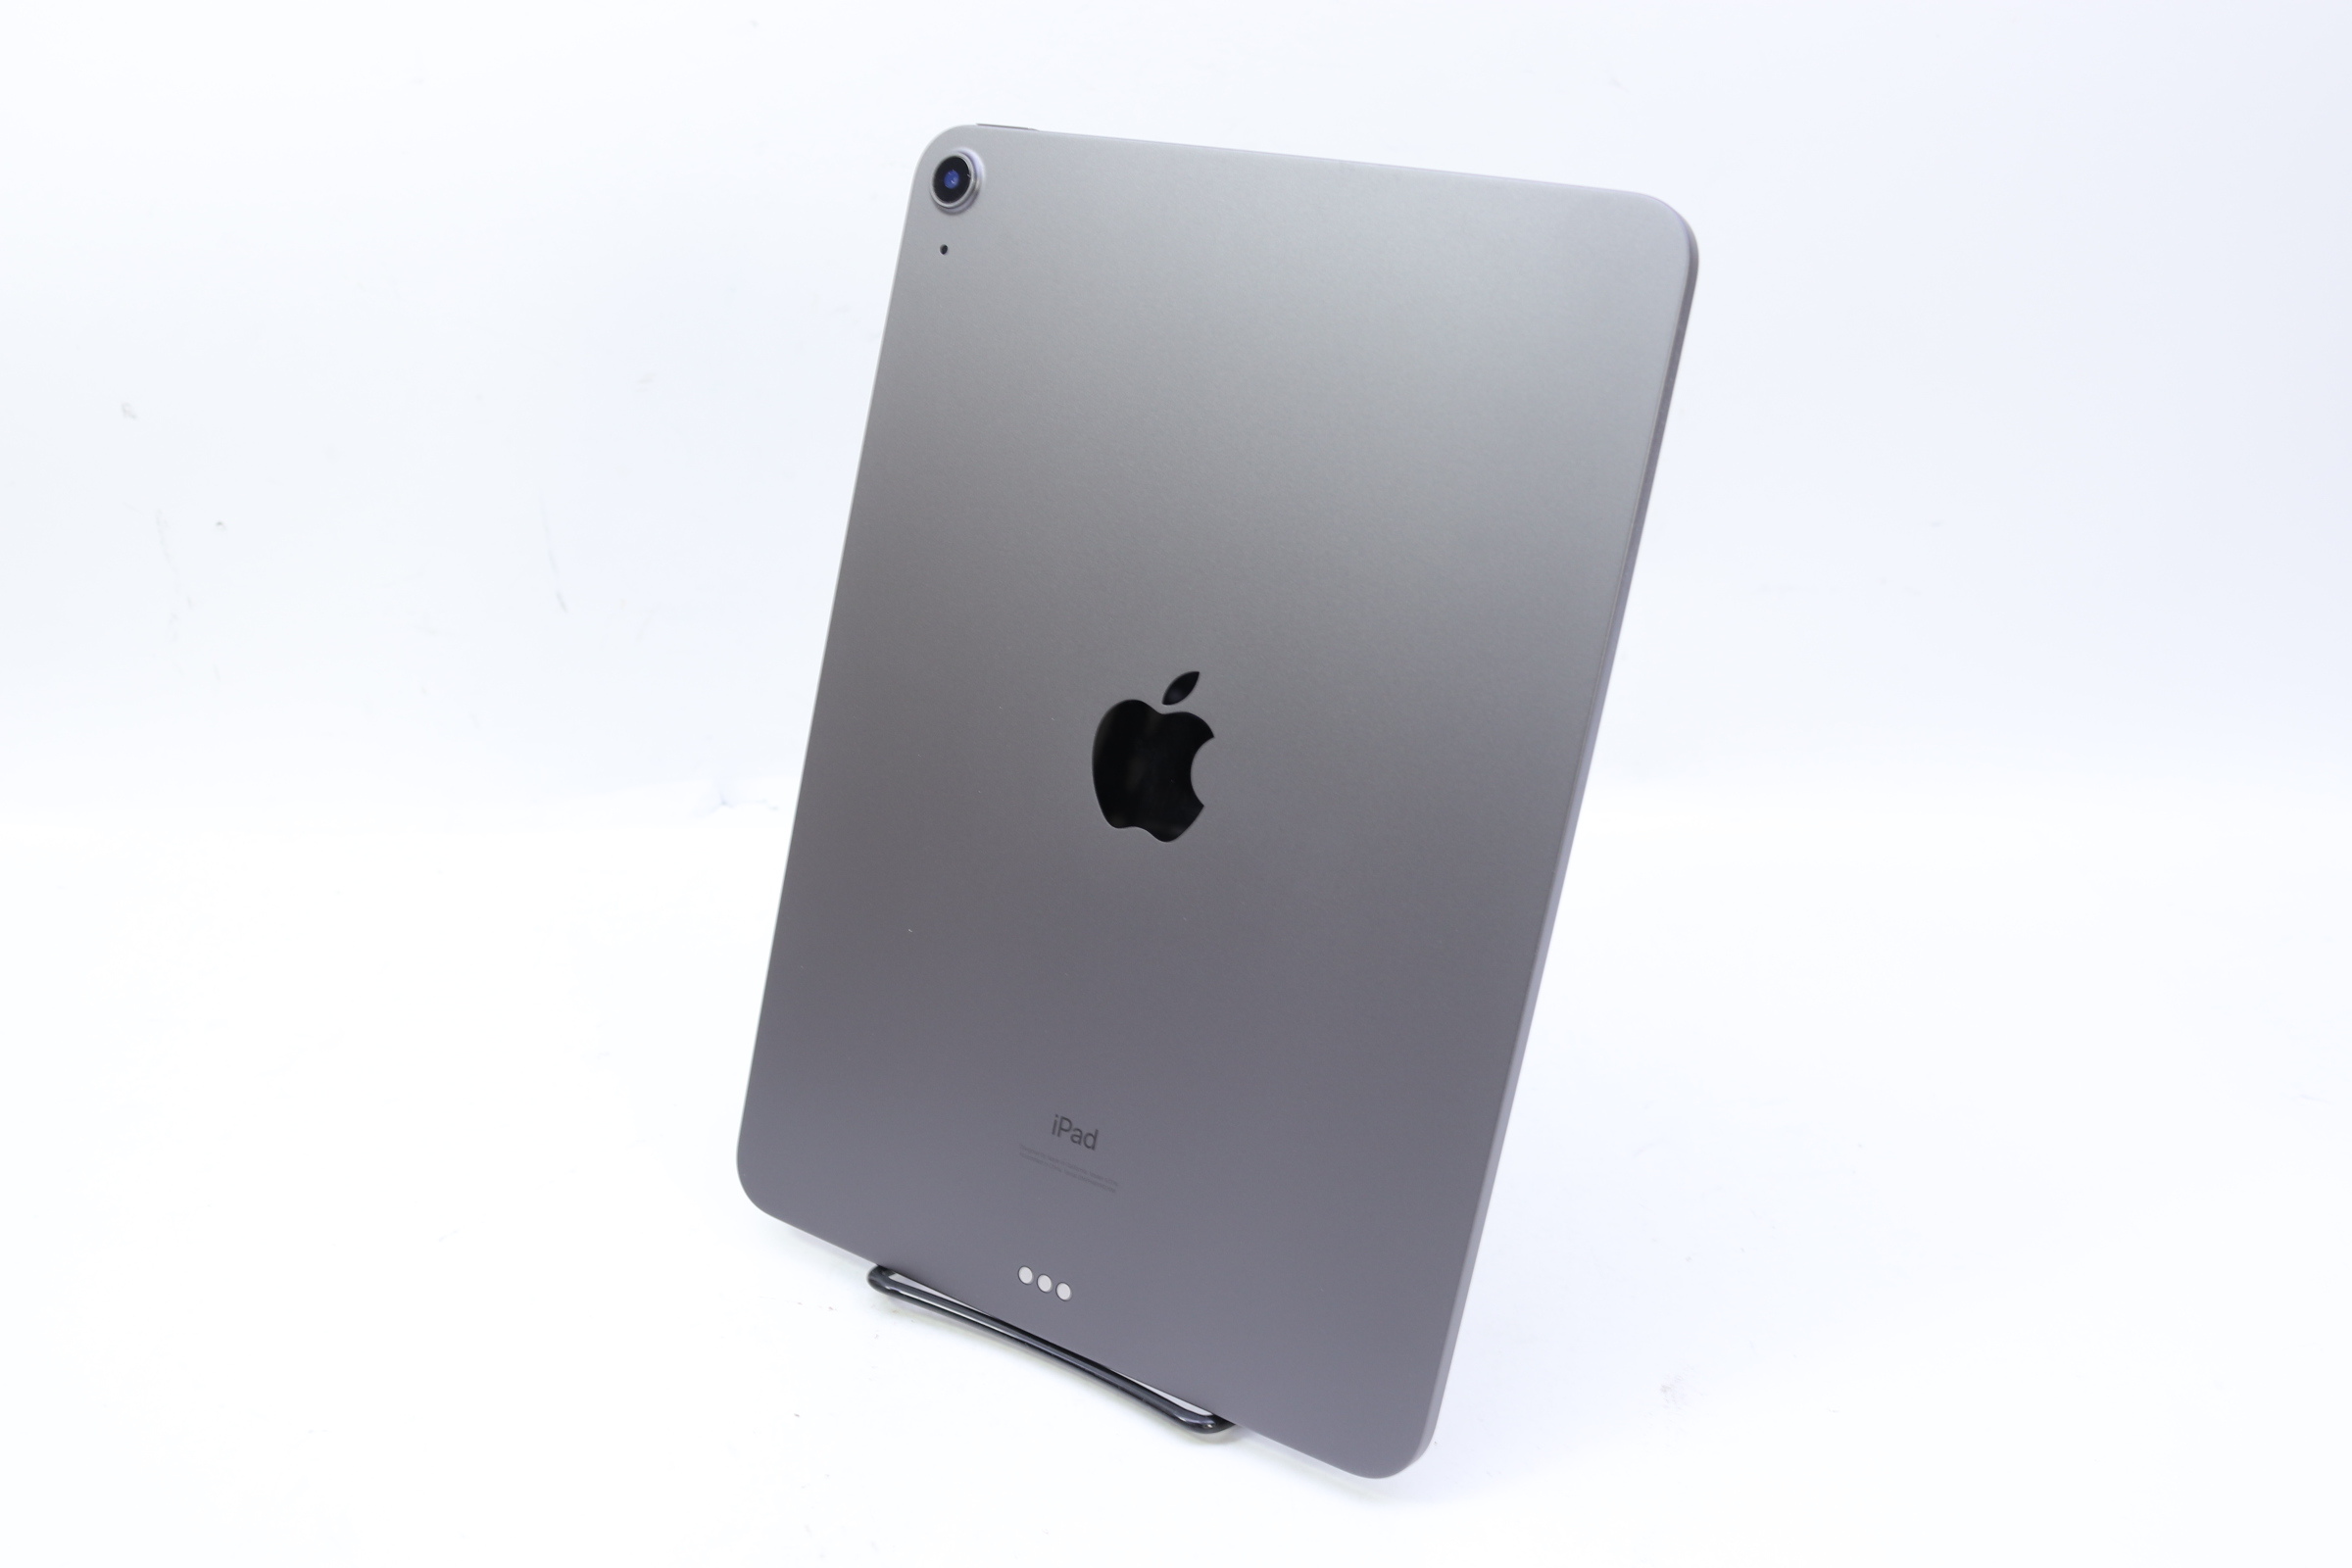  2020 Apple iPad Air (10.9-inch, Wi-Fi, 64GB) - Space